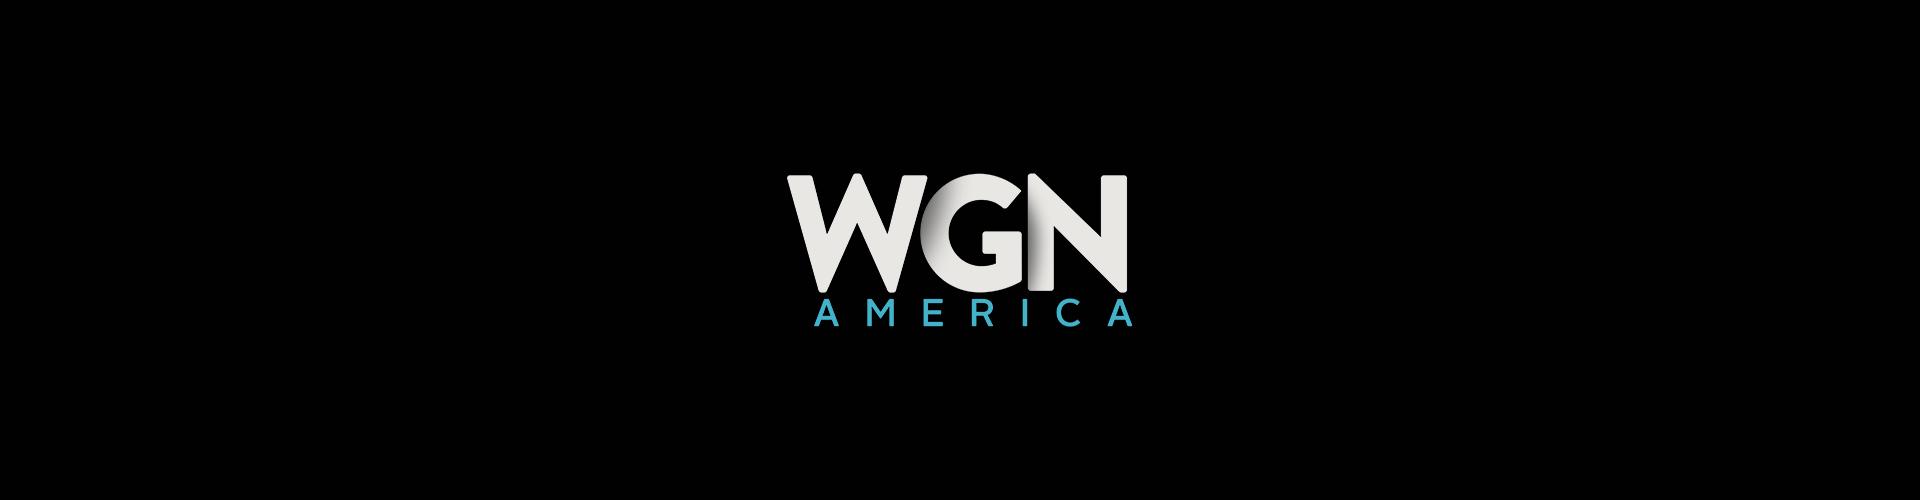 WGN Logo - Tribune Media | WGN America